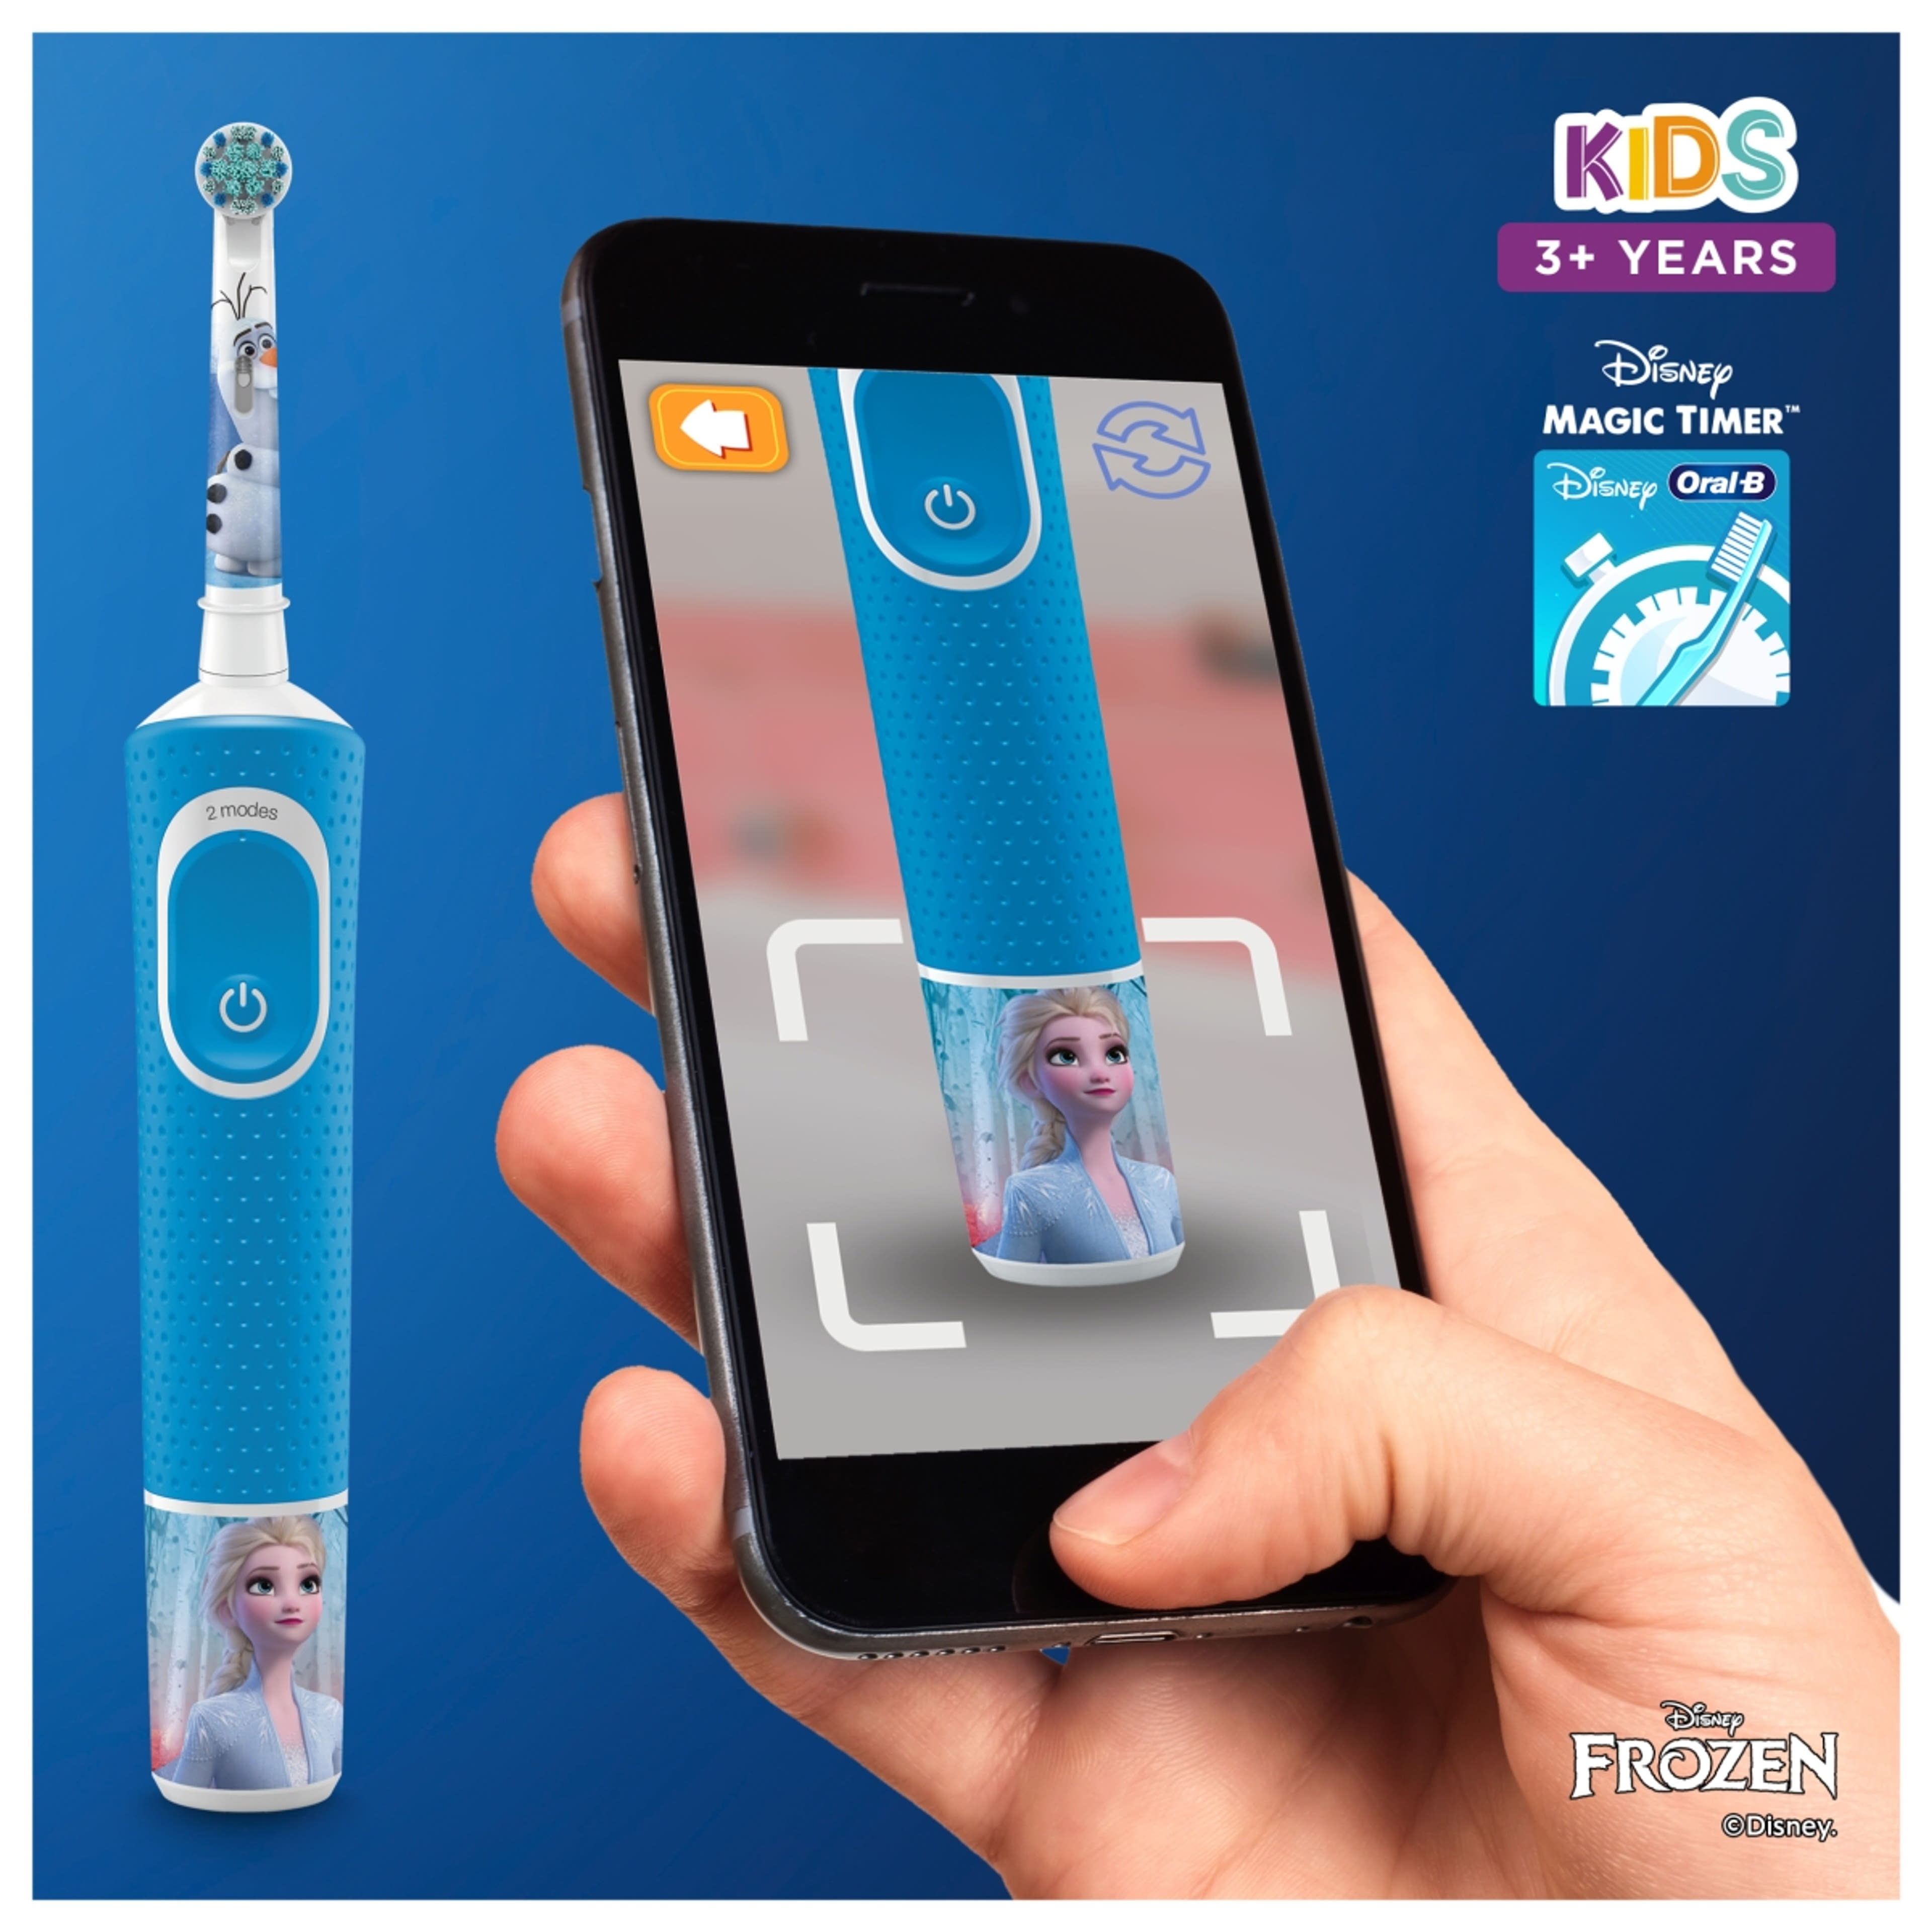 Oral-B Kisd Frozen II elektromos fogkefe utazótokkal - 1 db-6